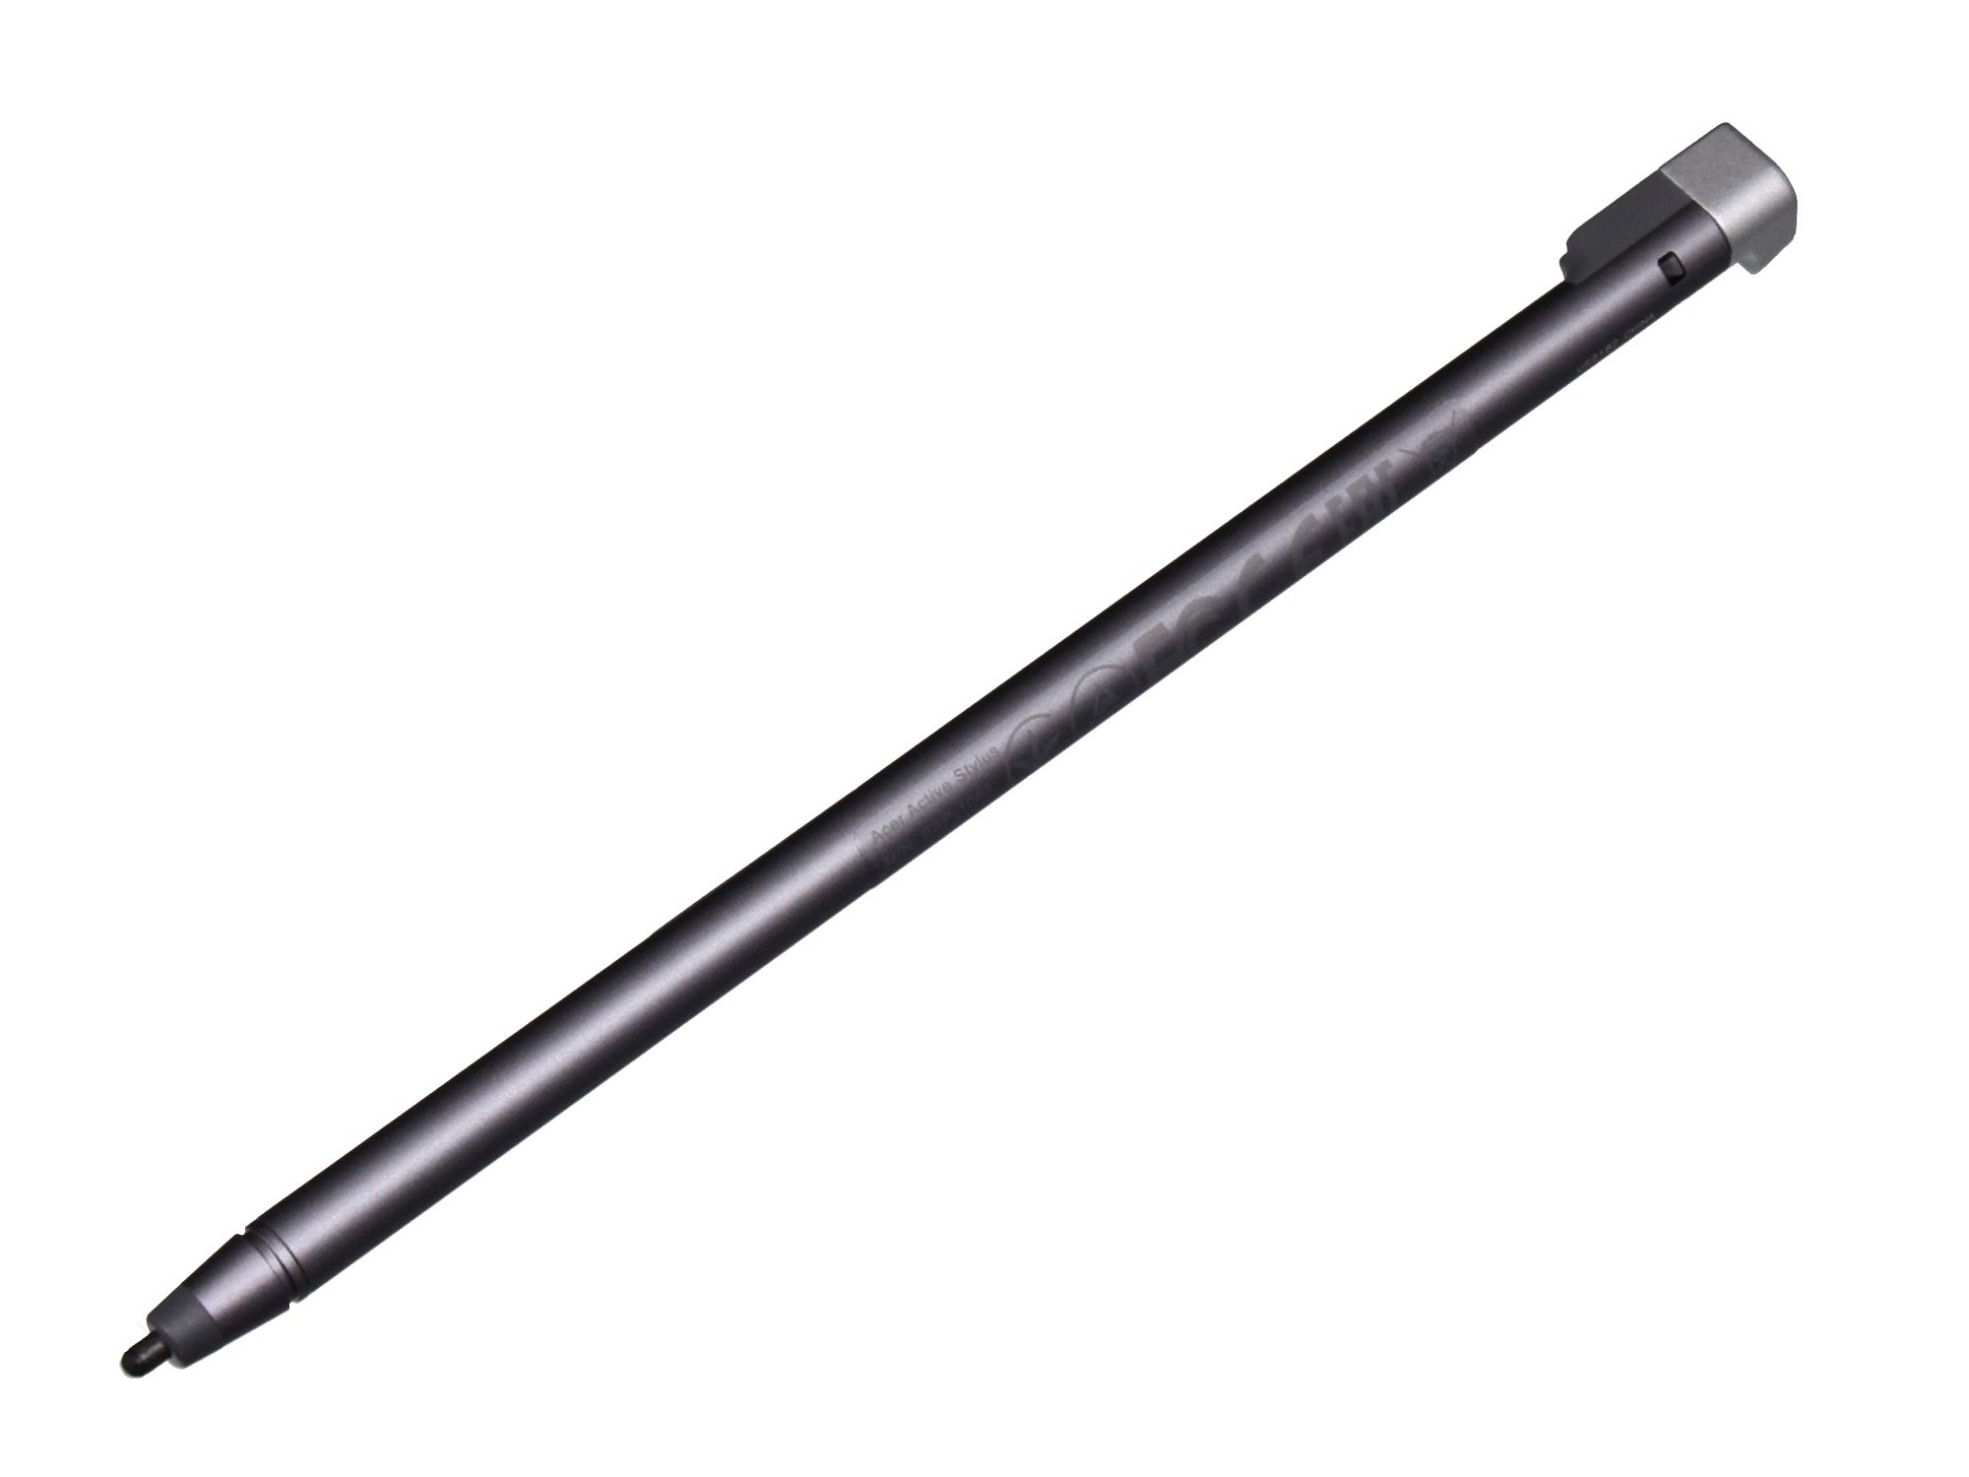 Acer ESP-1053 Stylus Pen